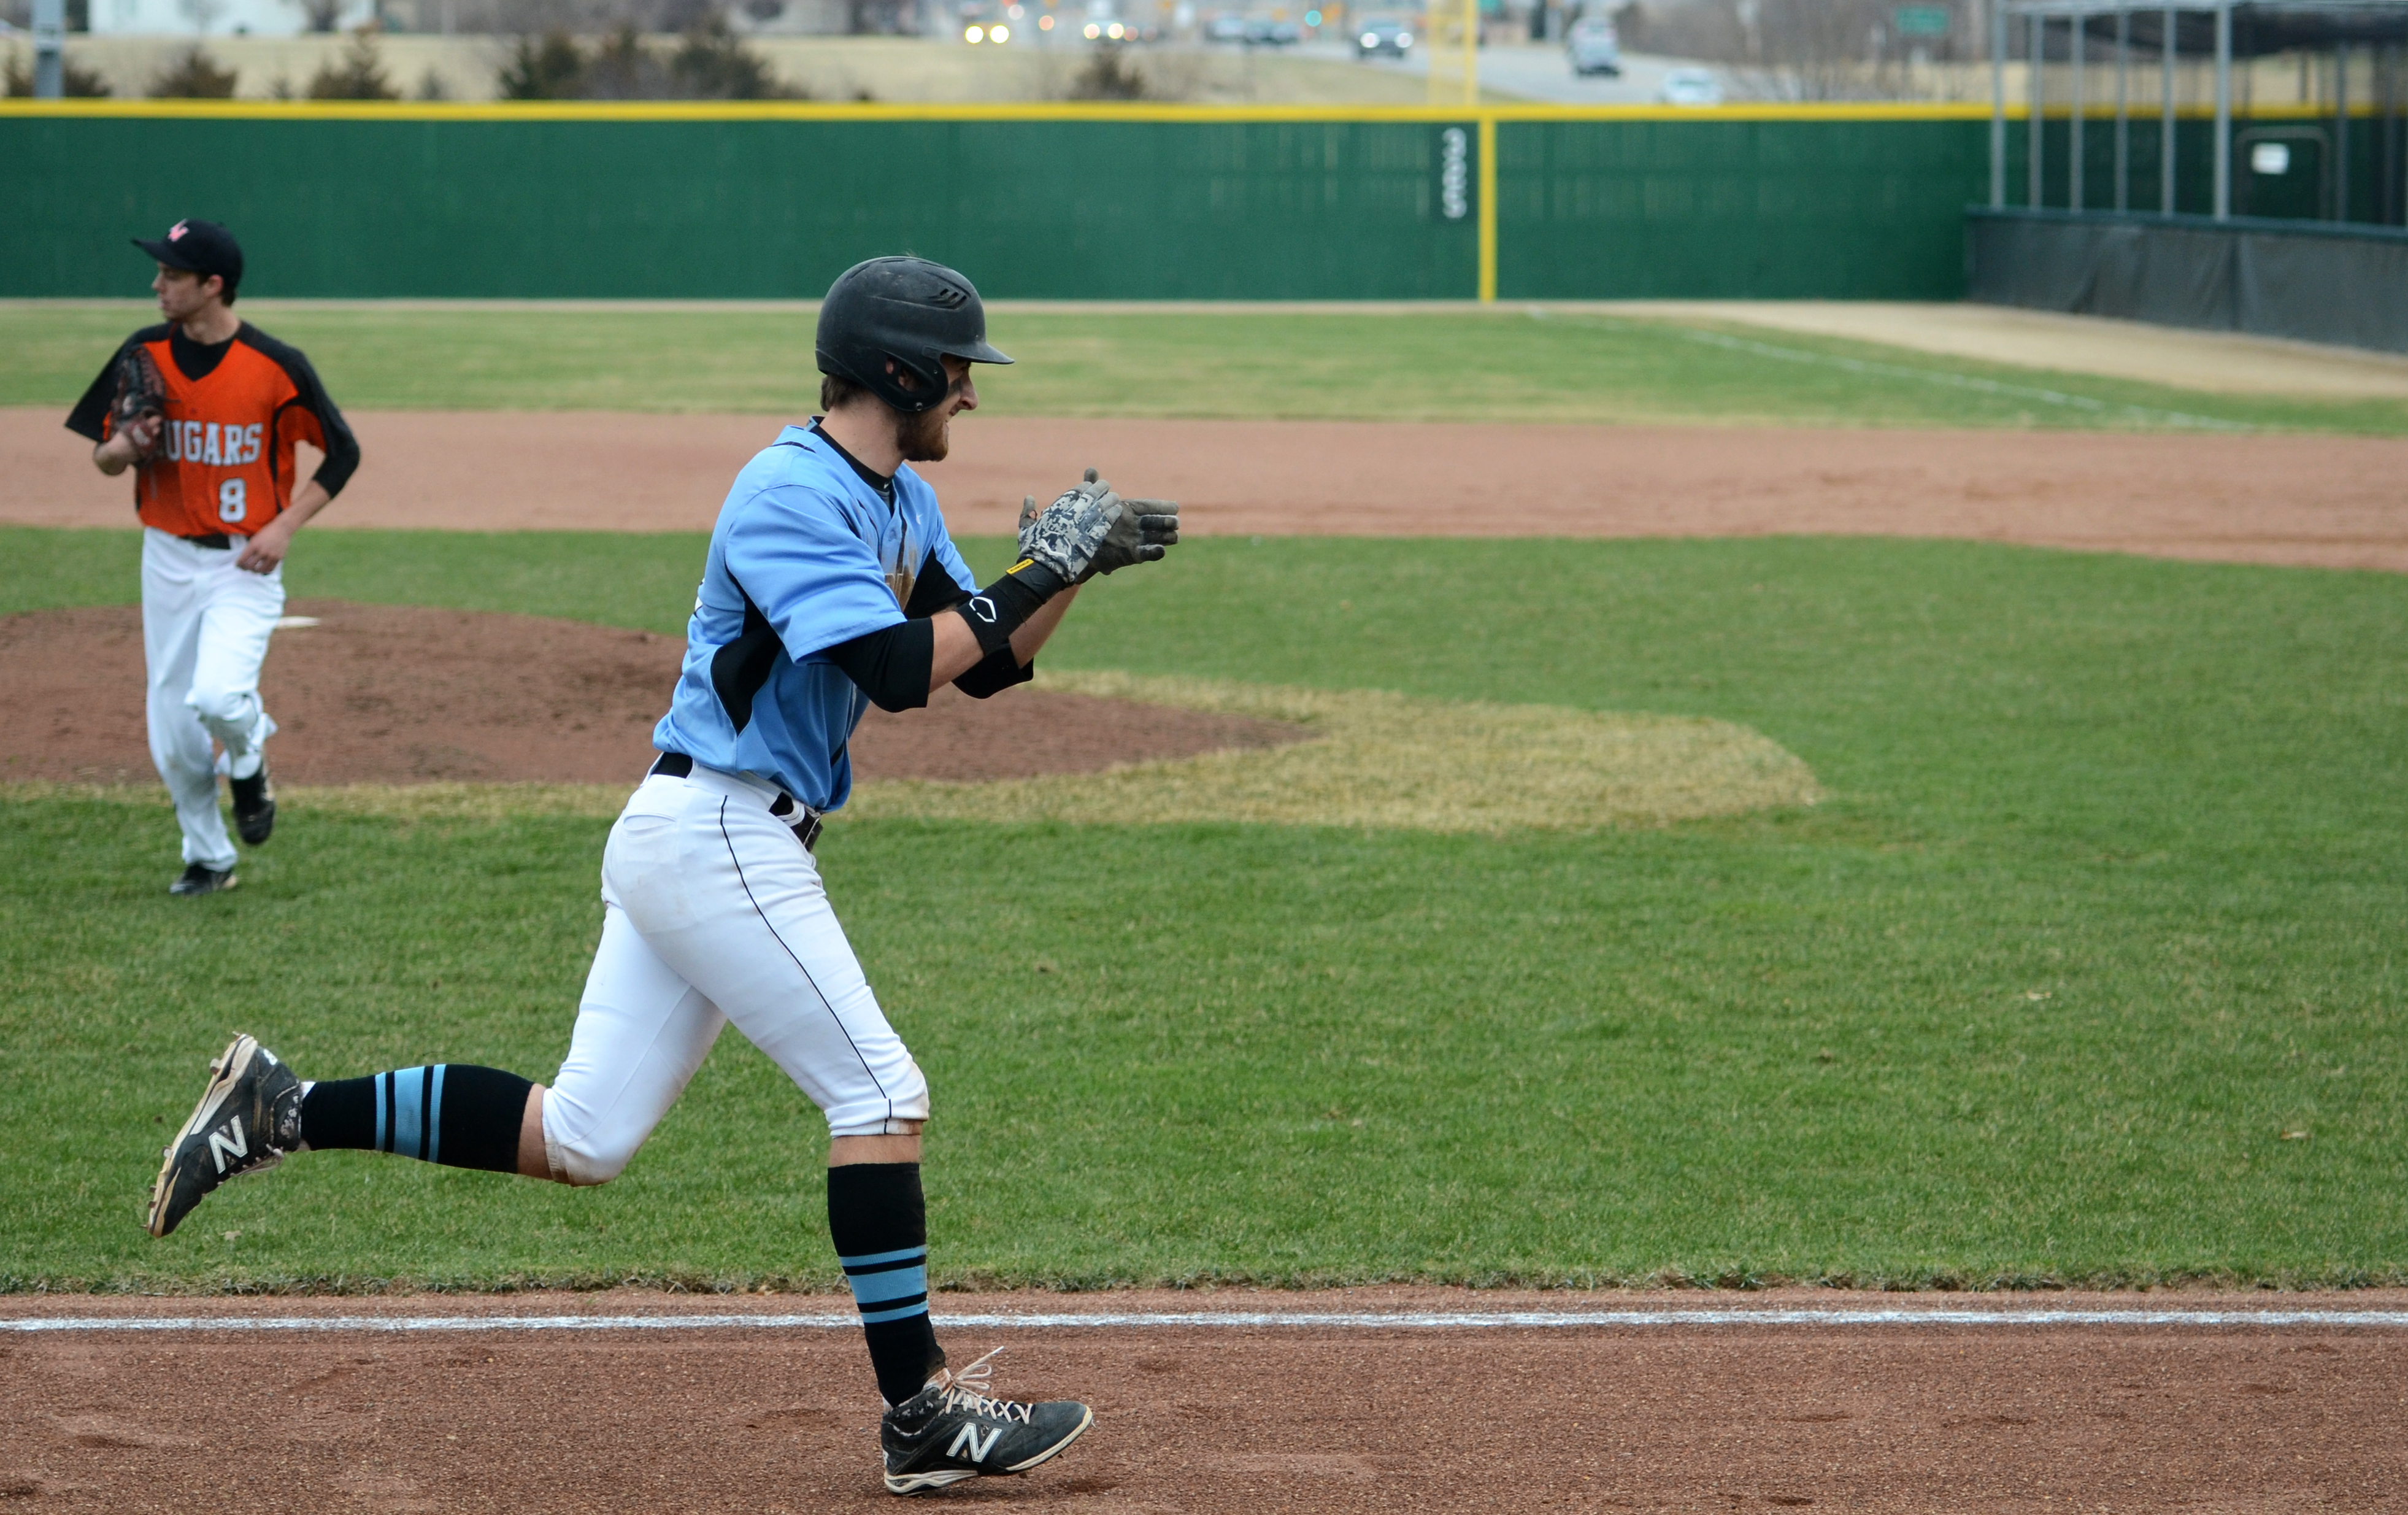 Iowa Baseball on X: Senior catcher @austin_martin34 is on the